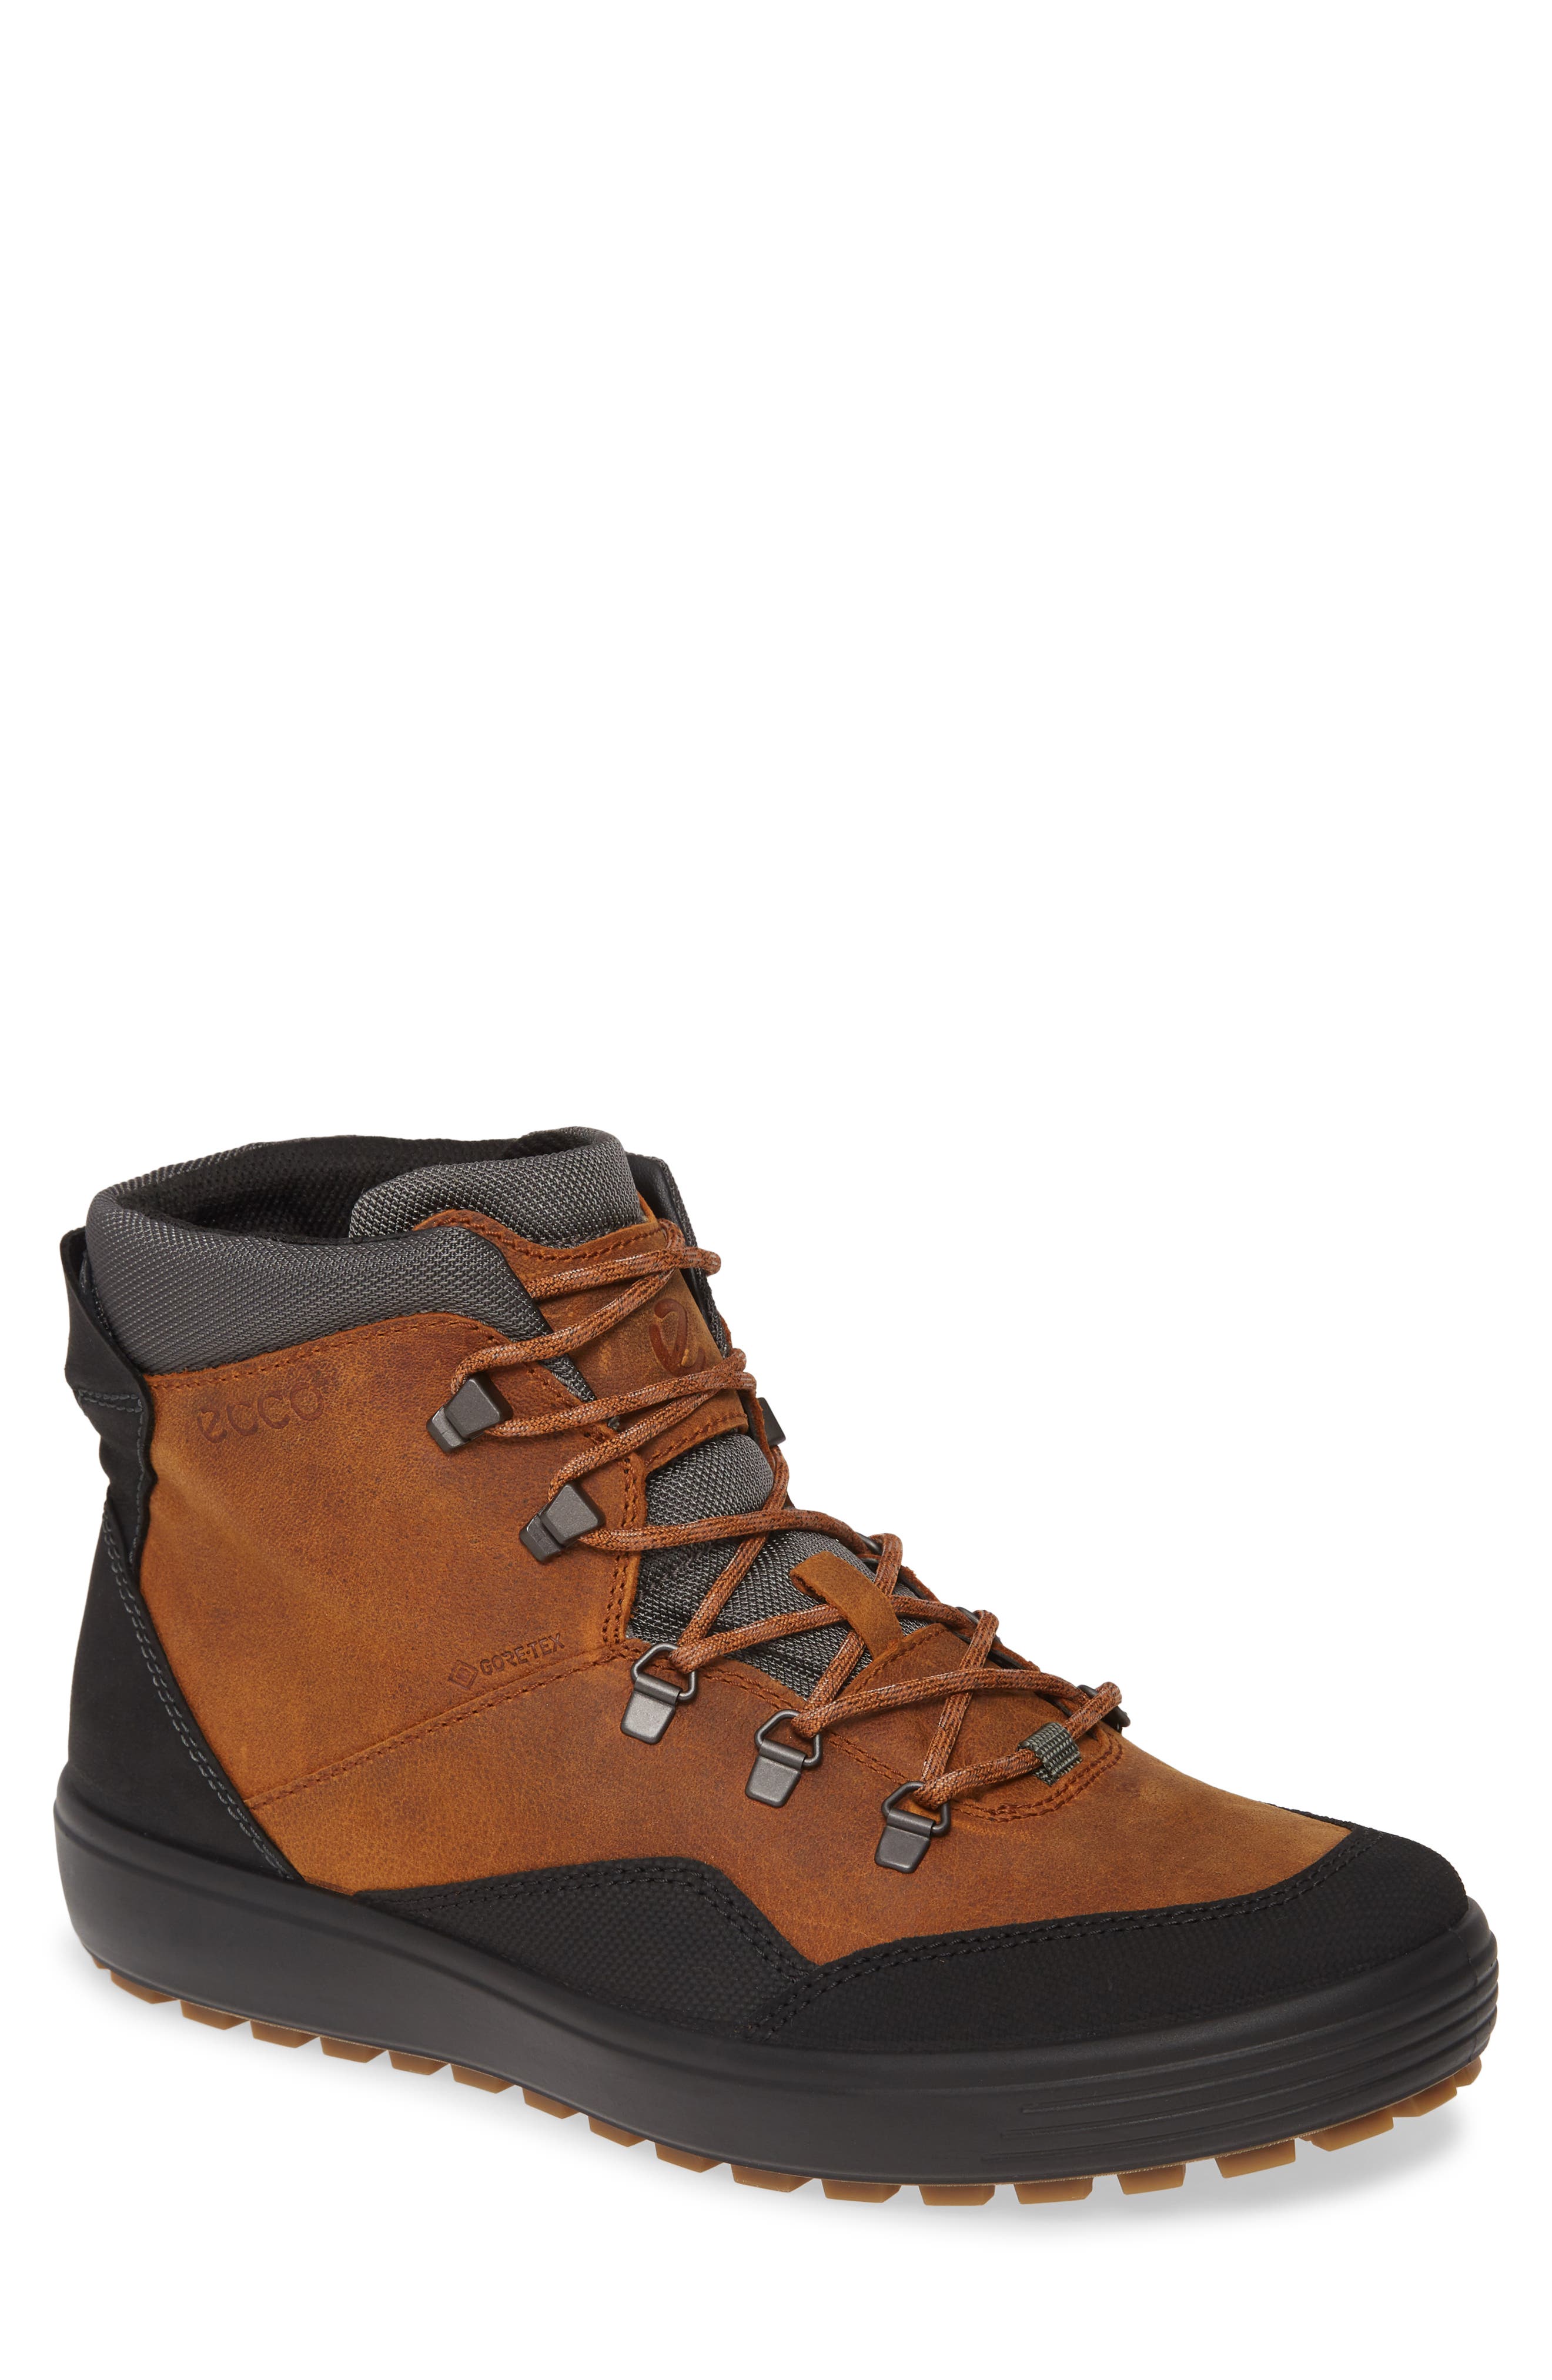 UPC 825840089943 product image for Men's Ecco Soft 7 Tred Terrain High Sneaker, Size 12-12.5US / 46EU - Brown | upcitemdb.com